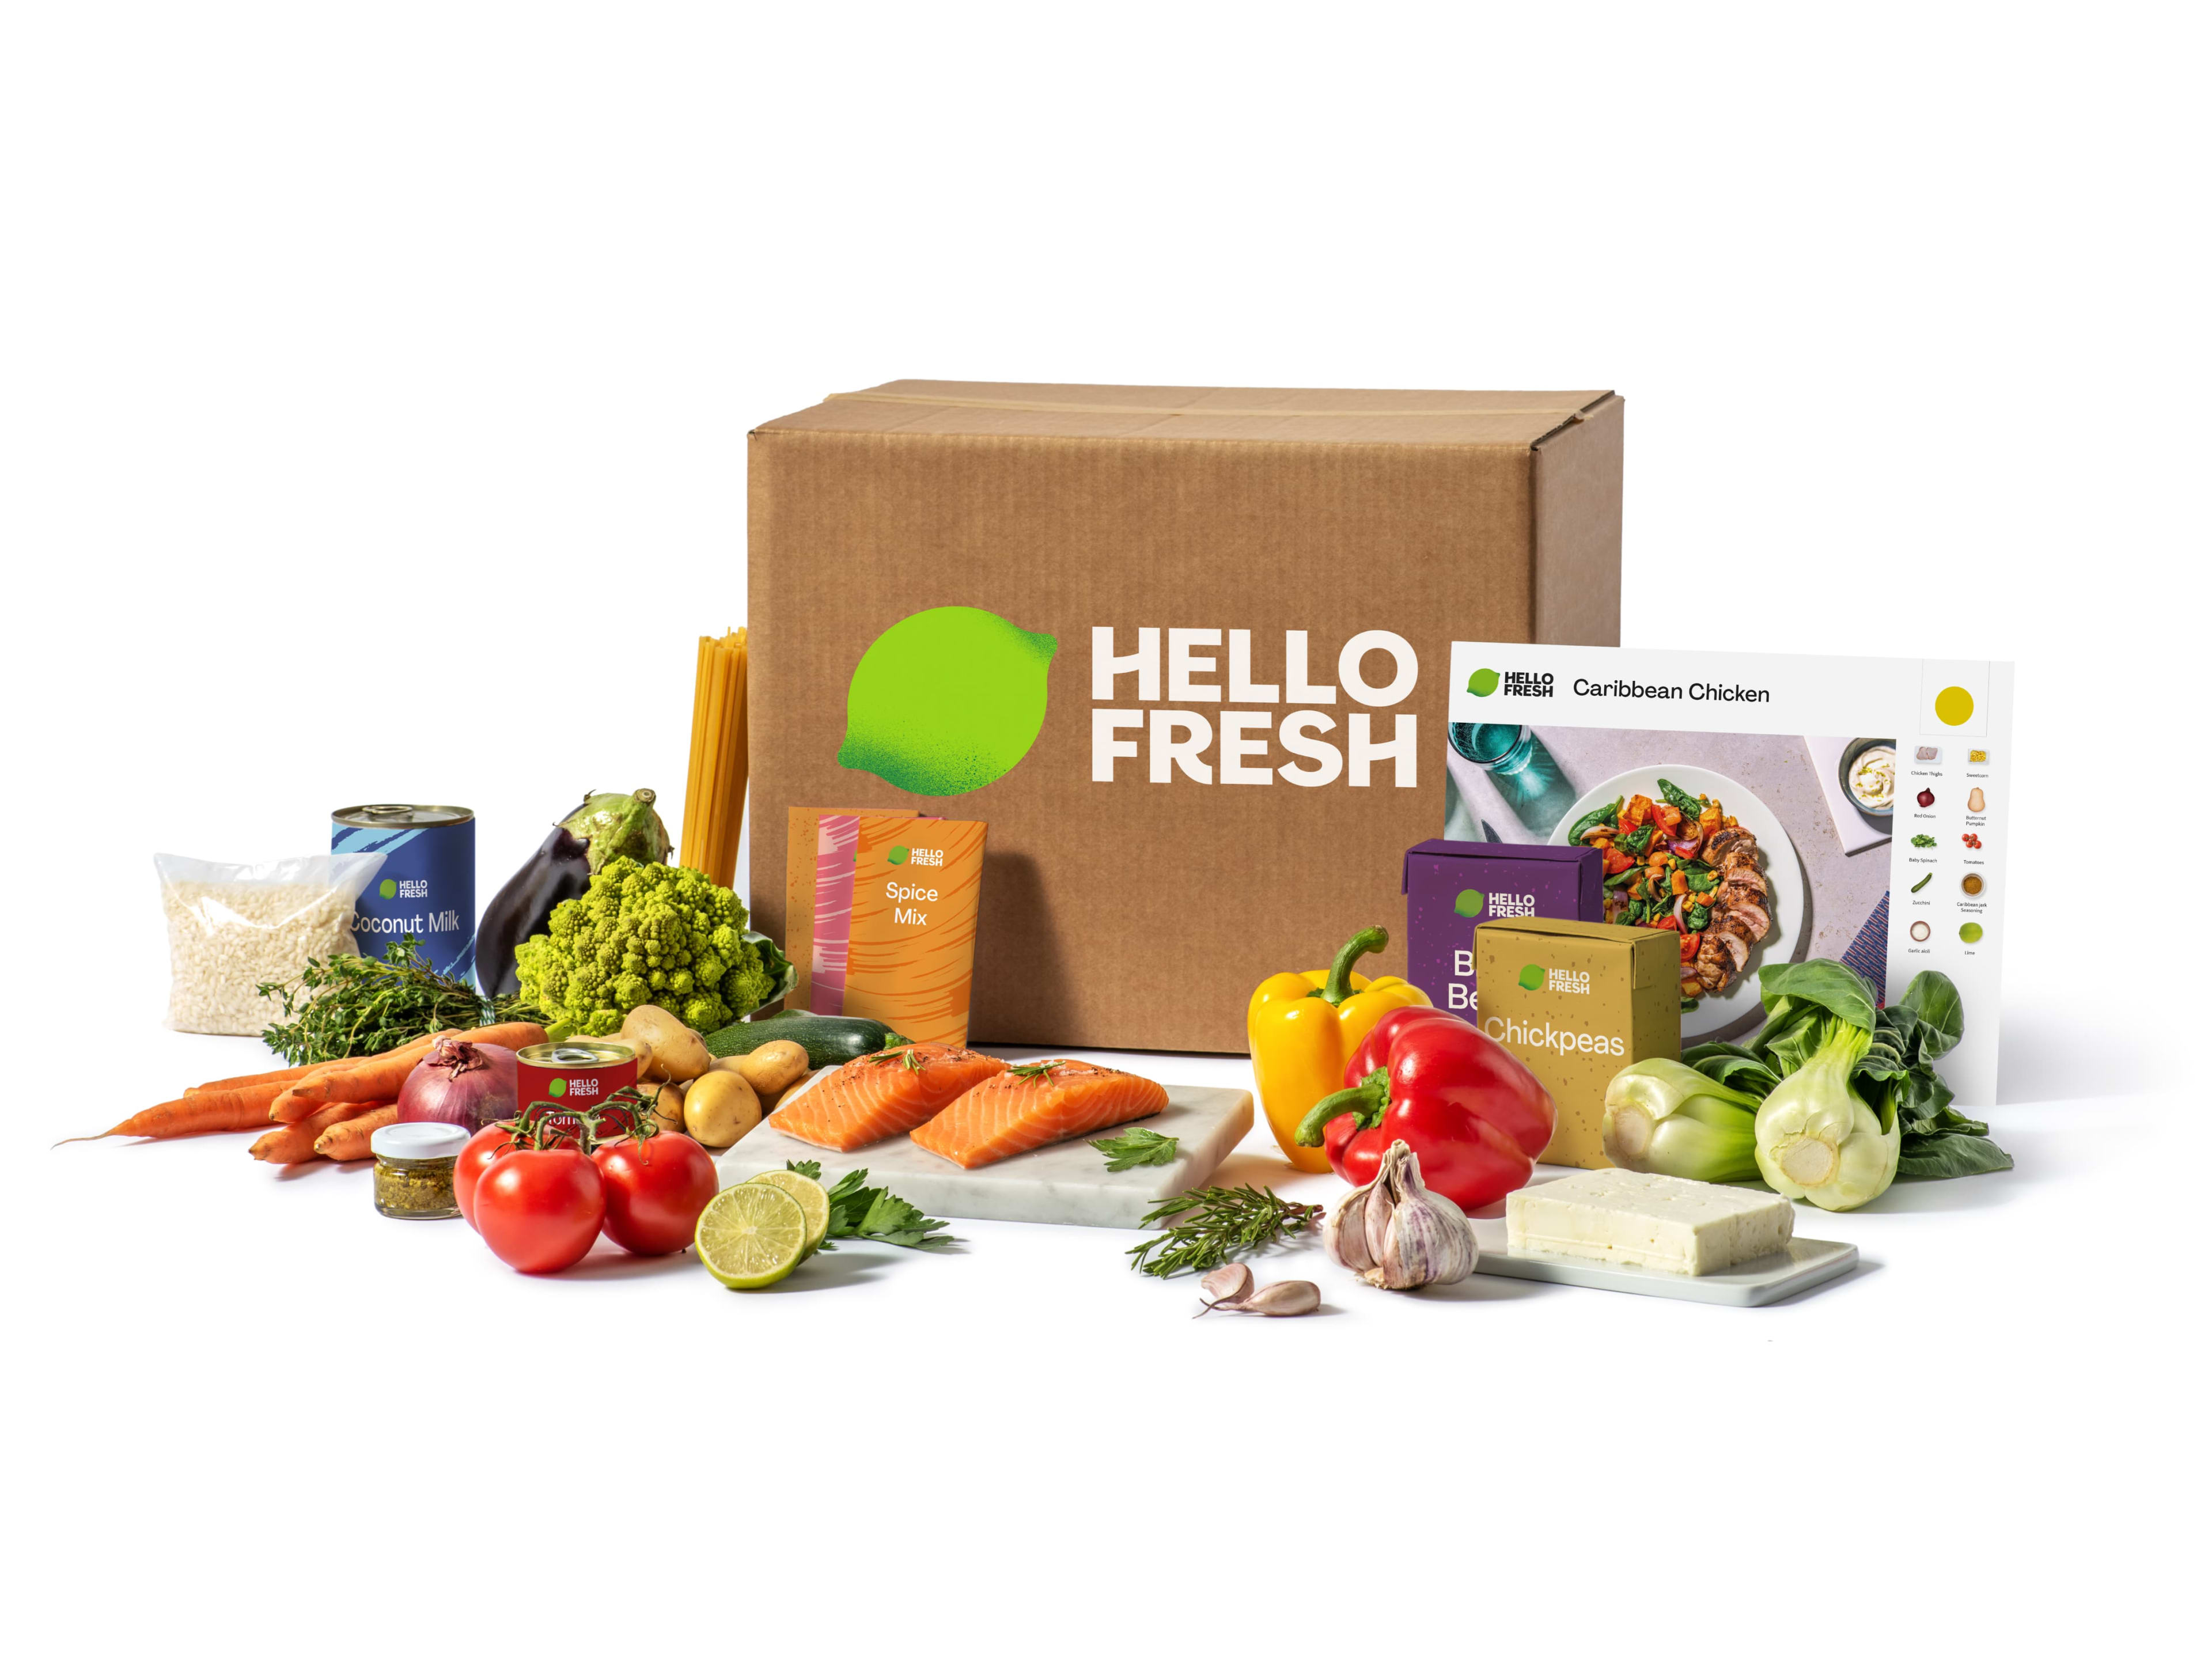 How do HelloFresh vegetarian meal kits work?